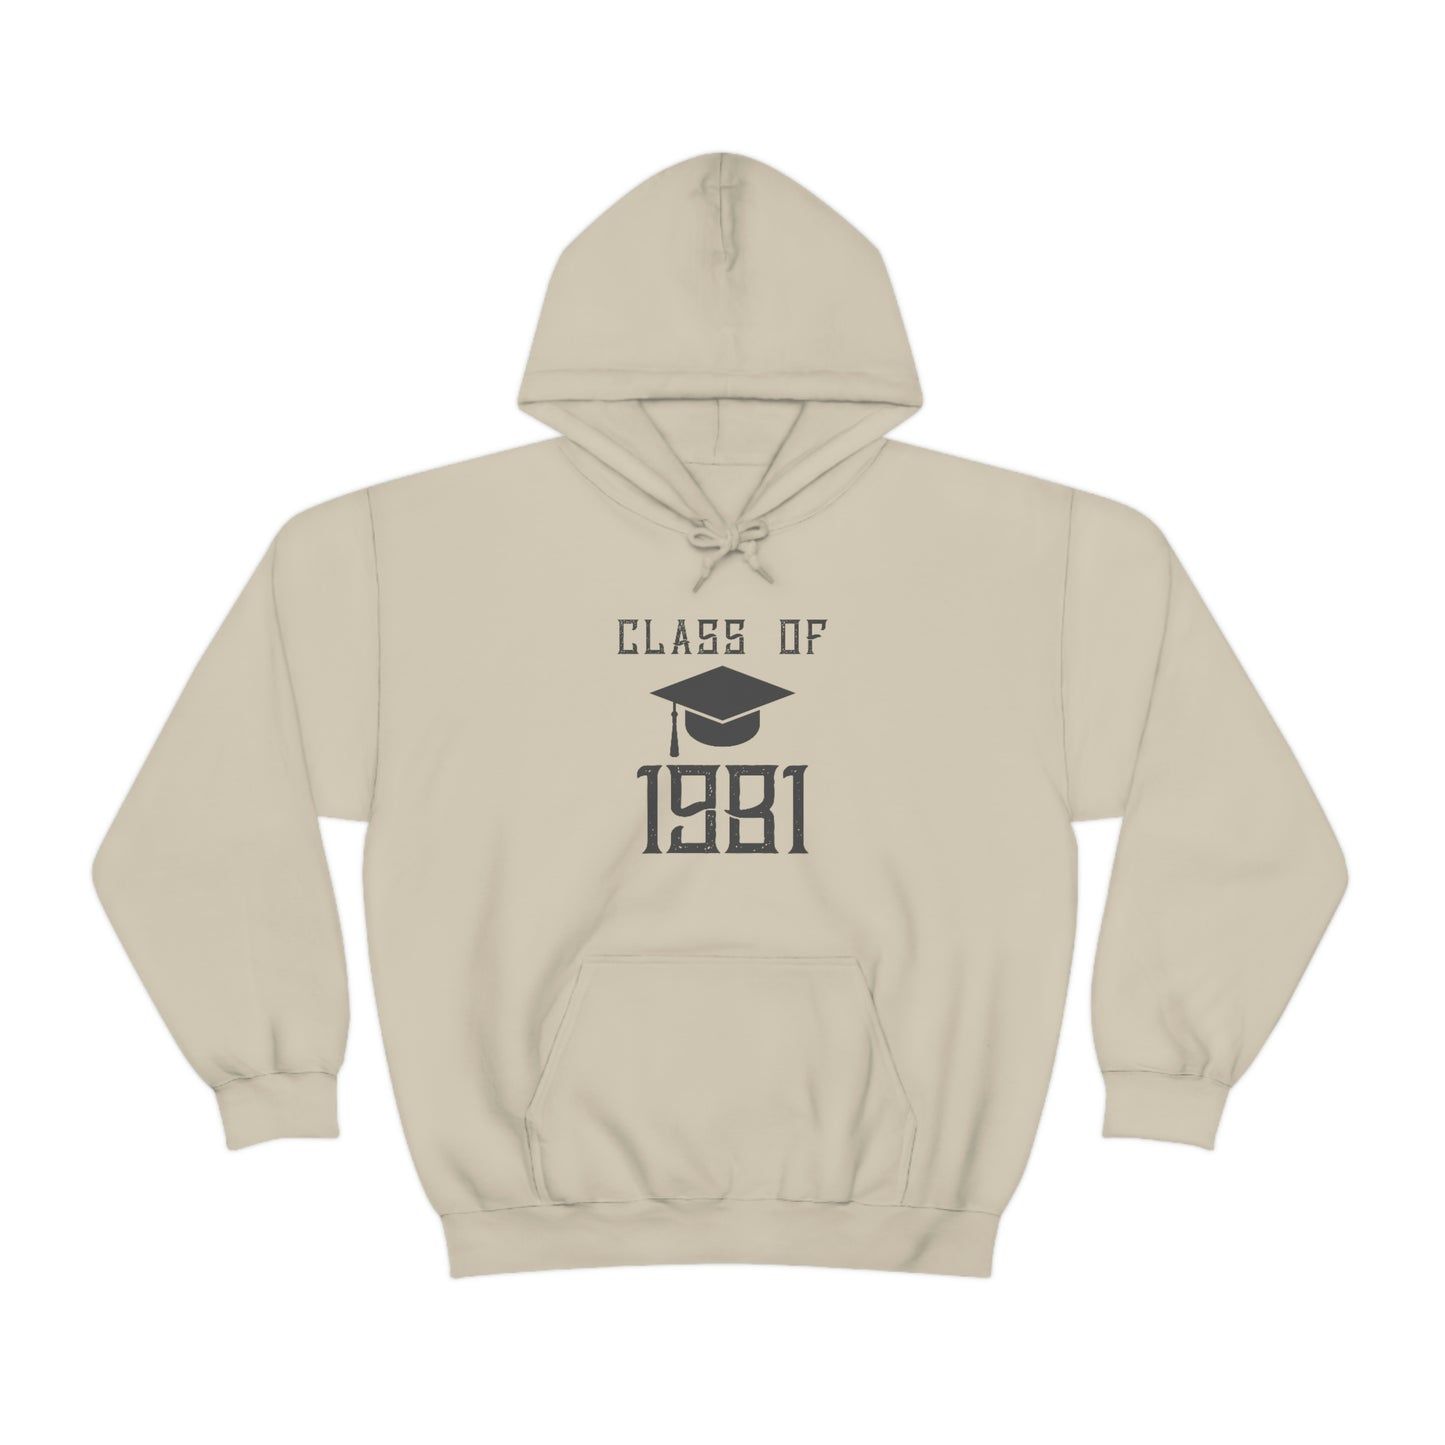 "Cozy and nostalgic 'Class Of 1981' hoodie for graduates."